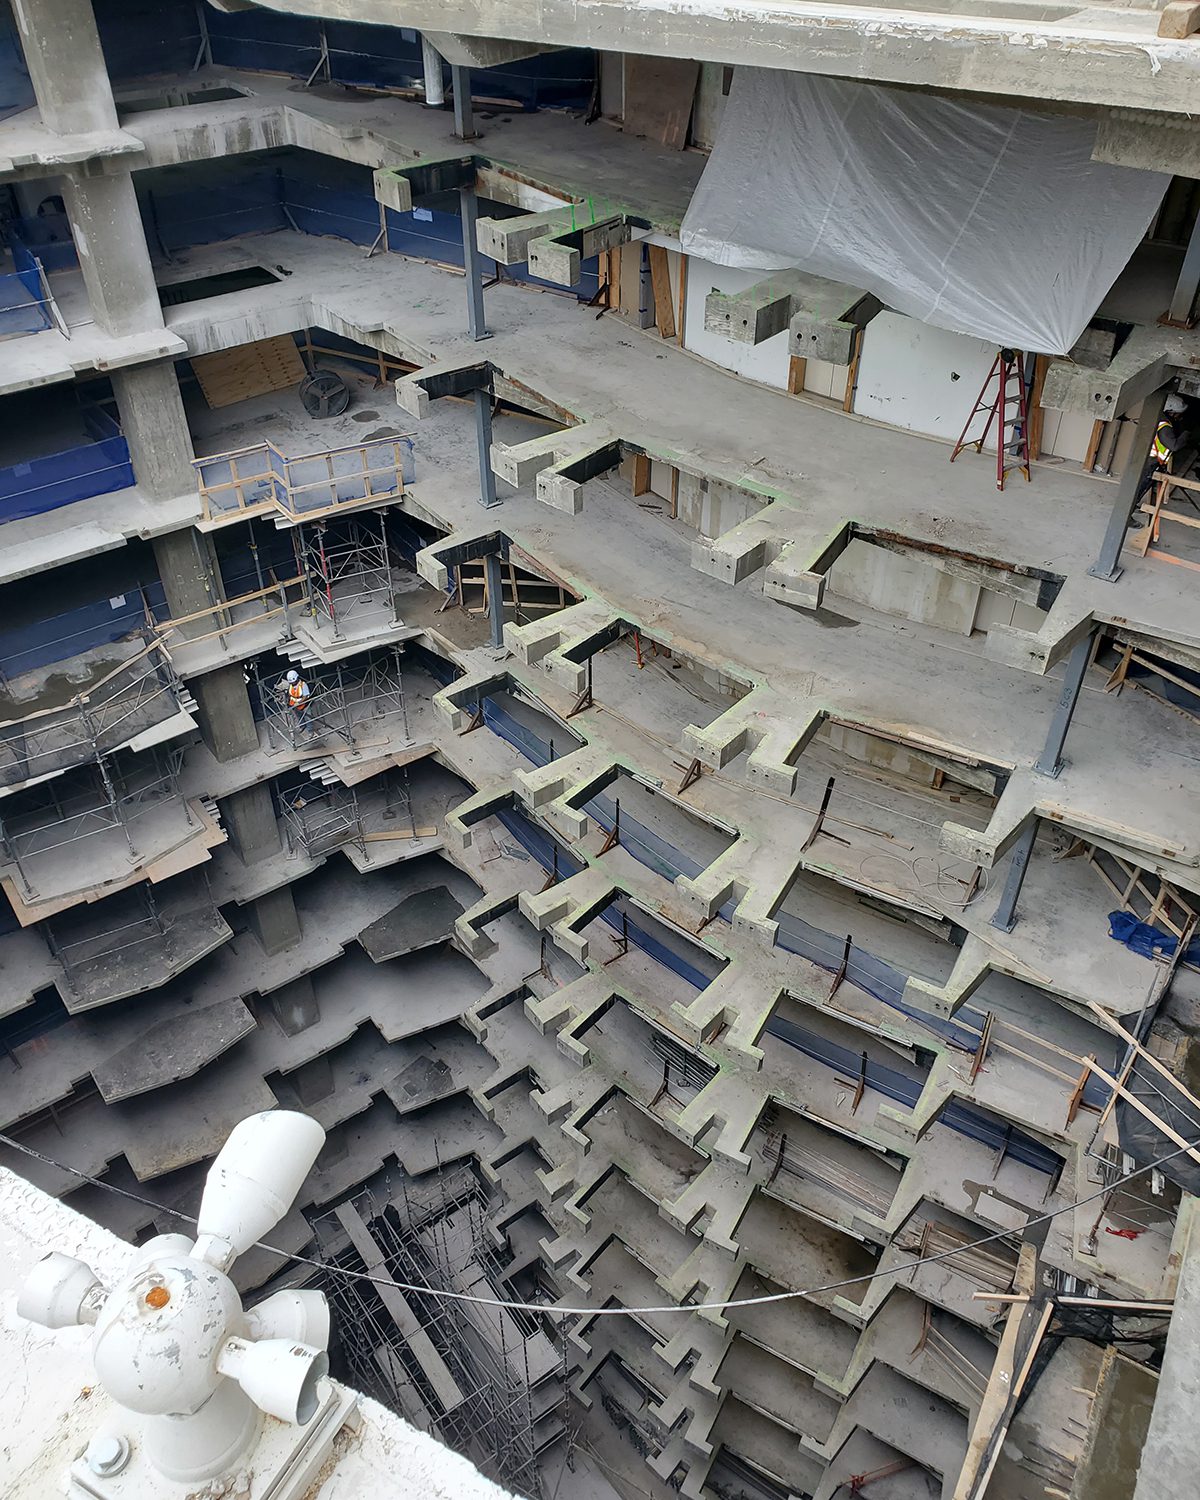 Interior architectural demolition at 1425 New York Avenue in Washington, DC